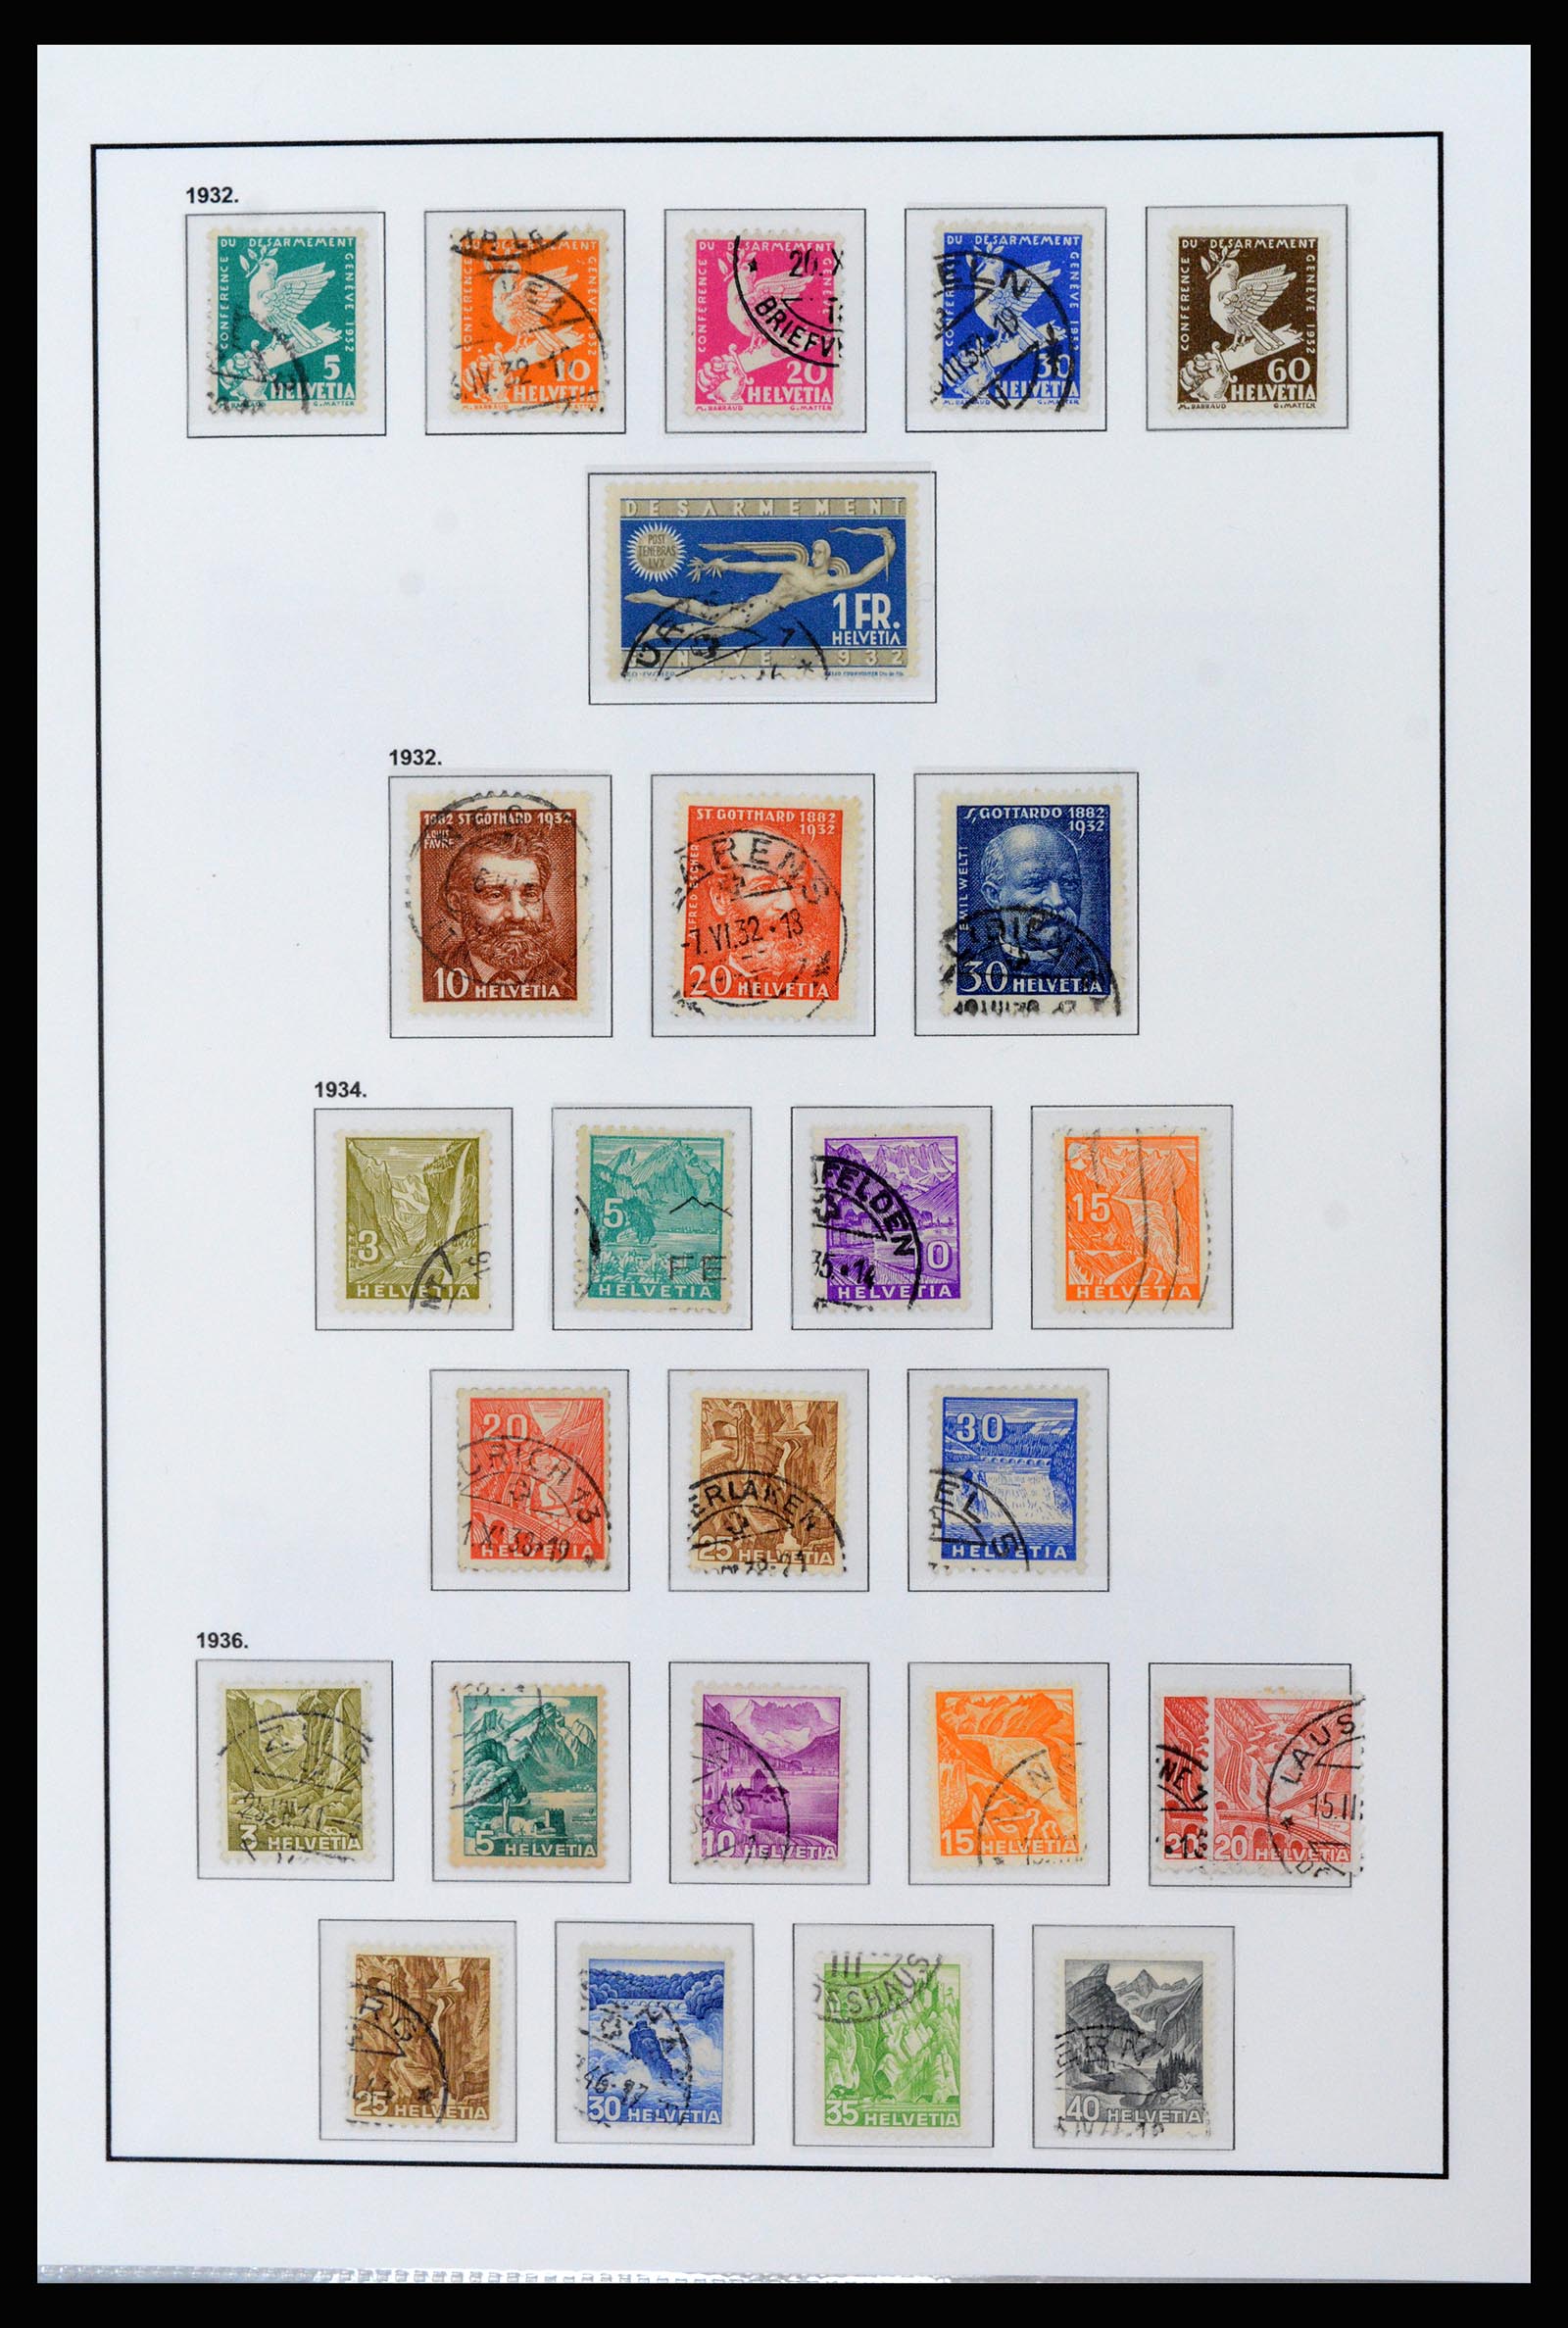 37225 010 - Stamp collection 37225 Switzerland 1854-2020.